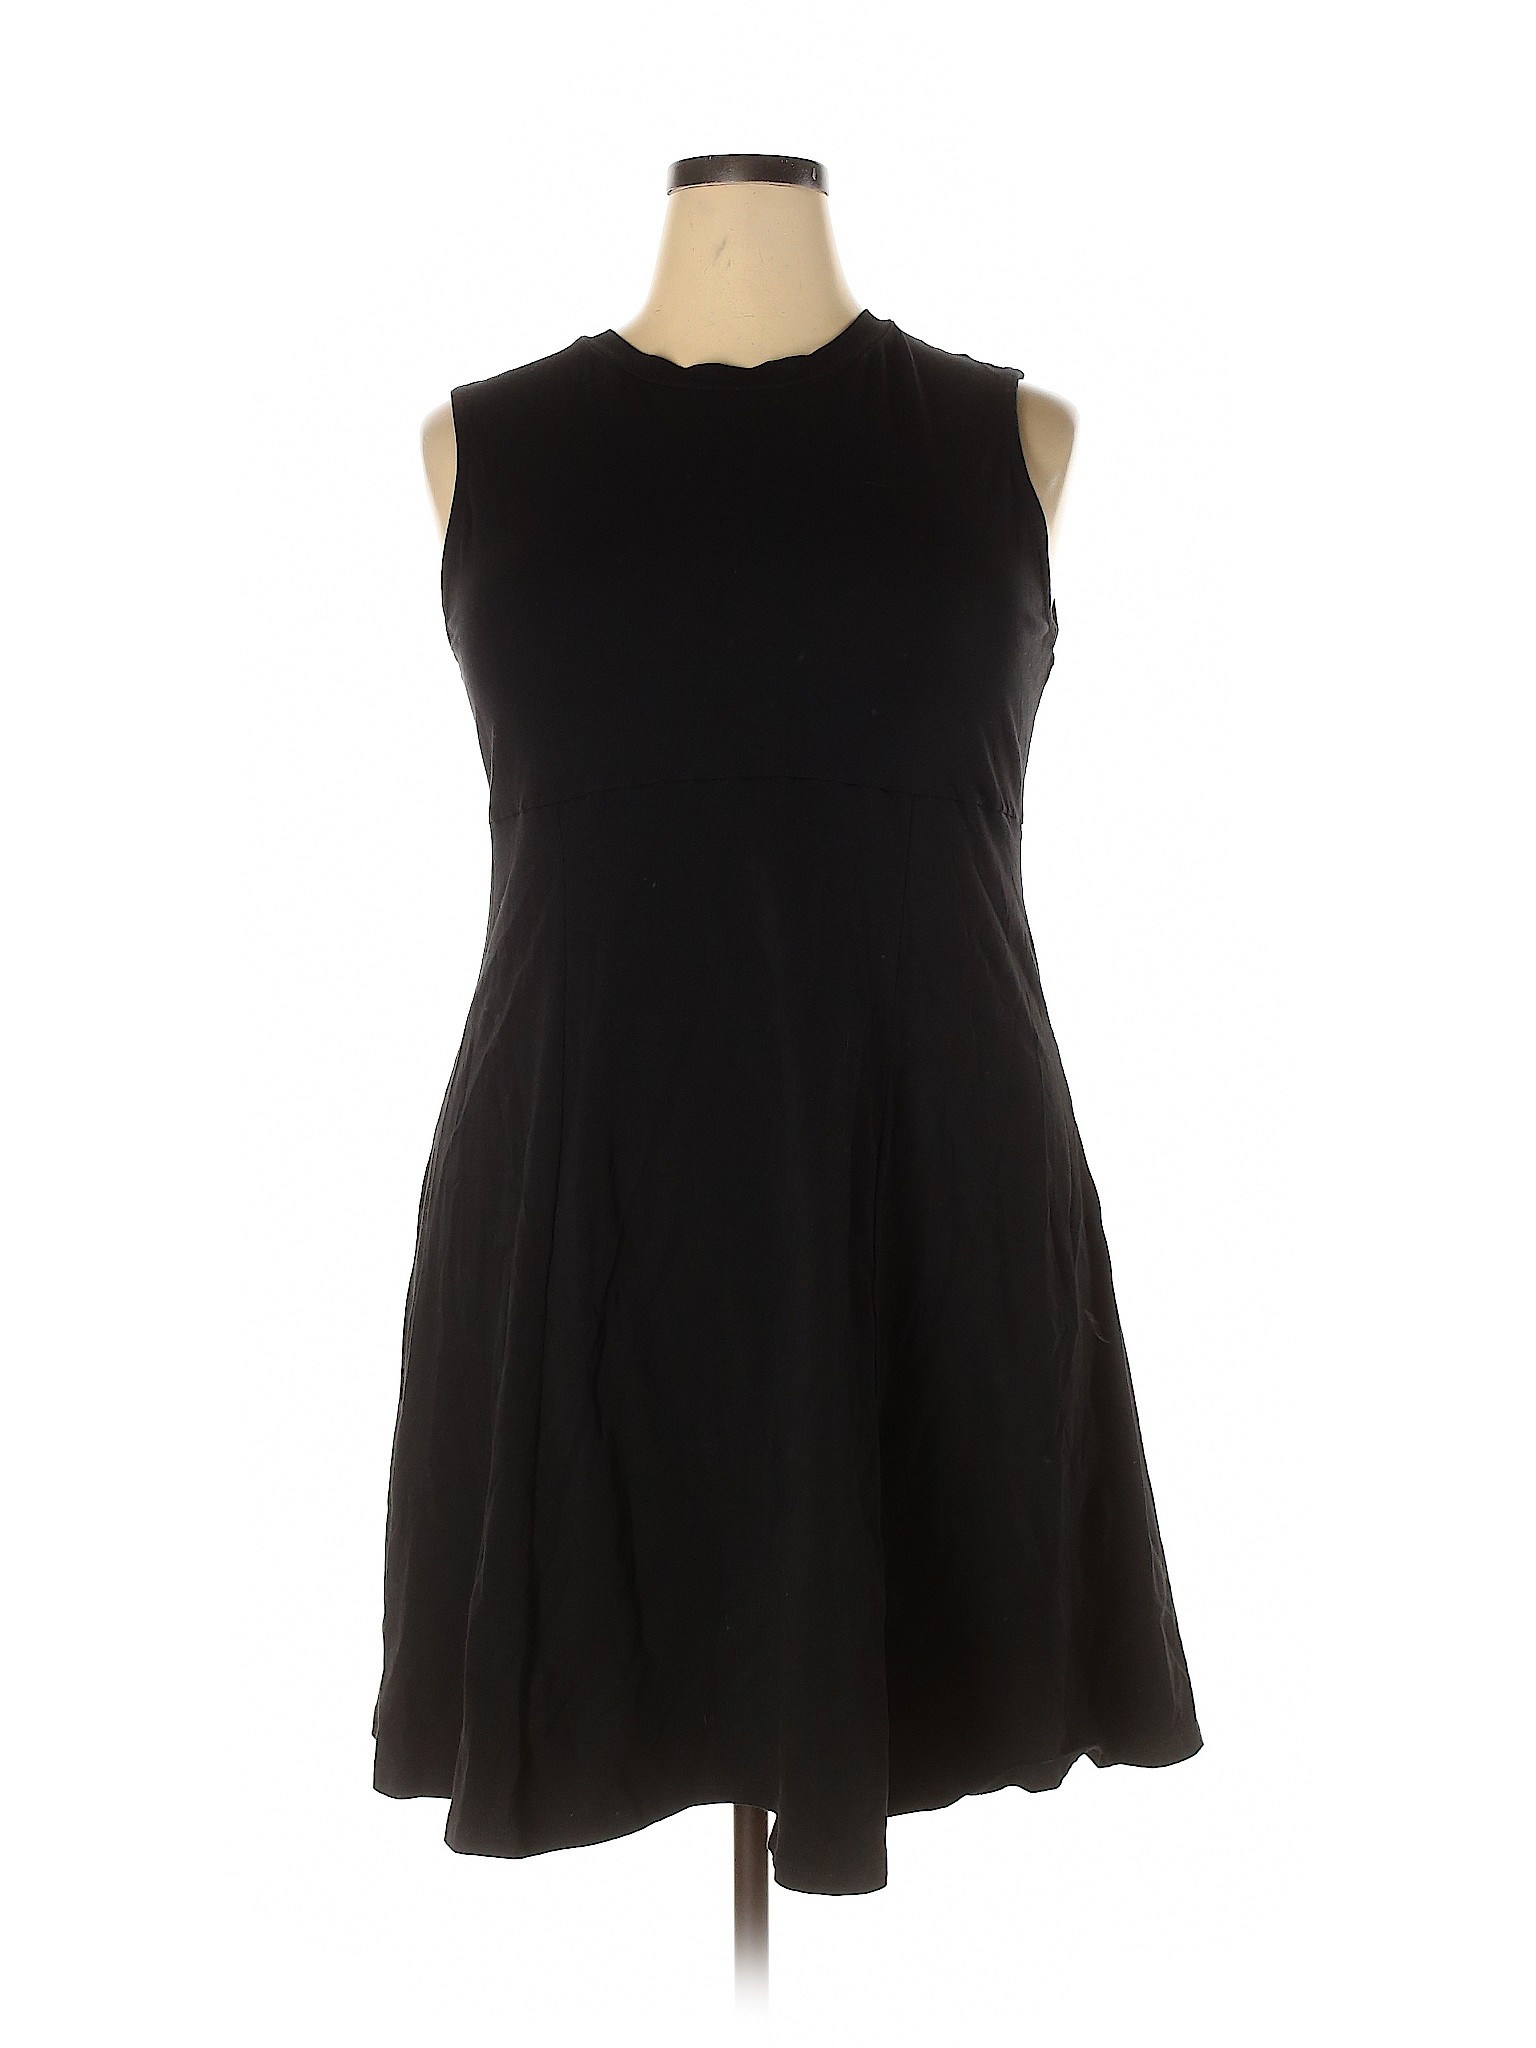 ASOS Women Black Casual Dress 18 Plus | eBay